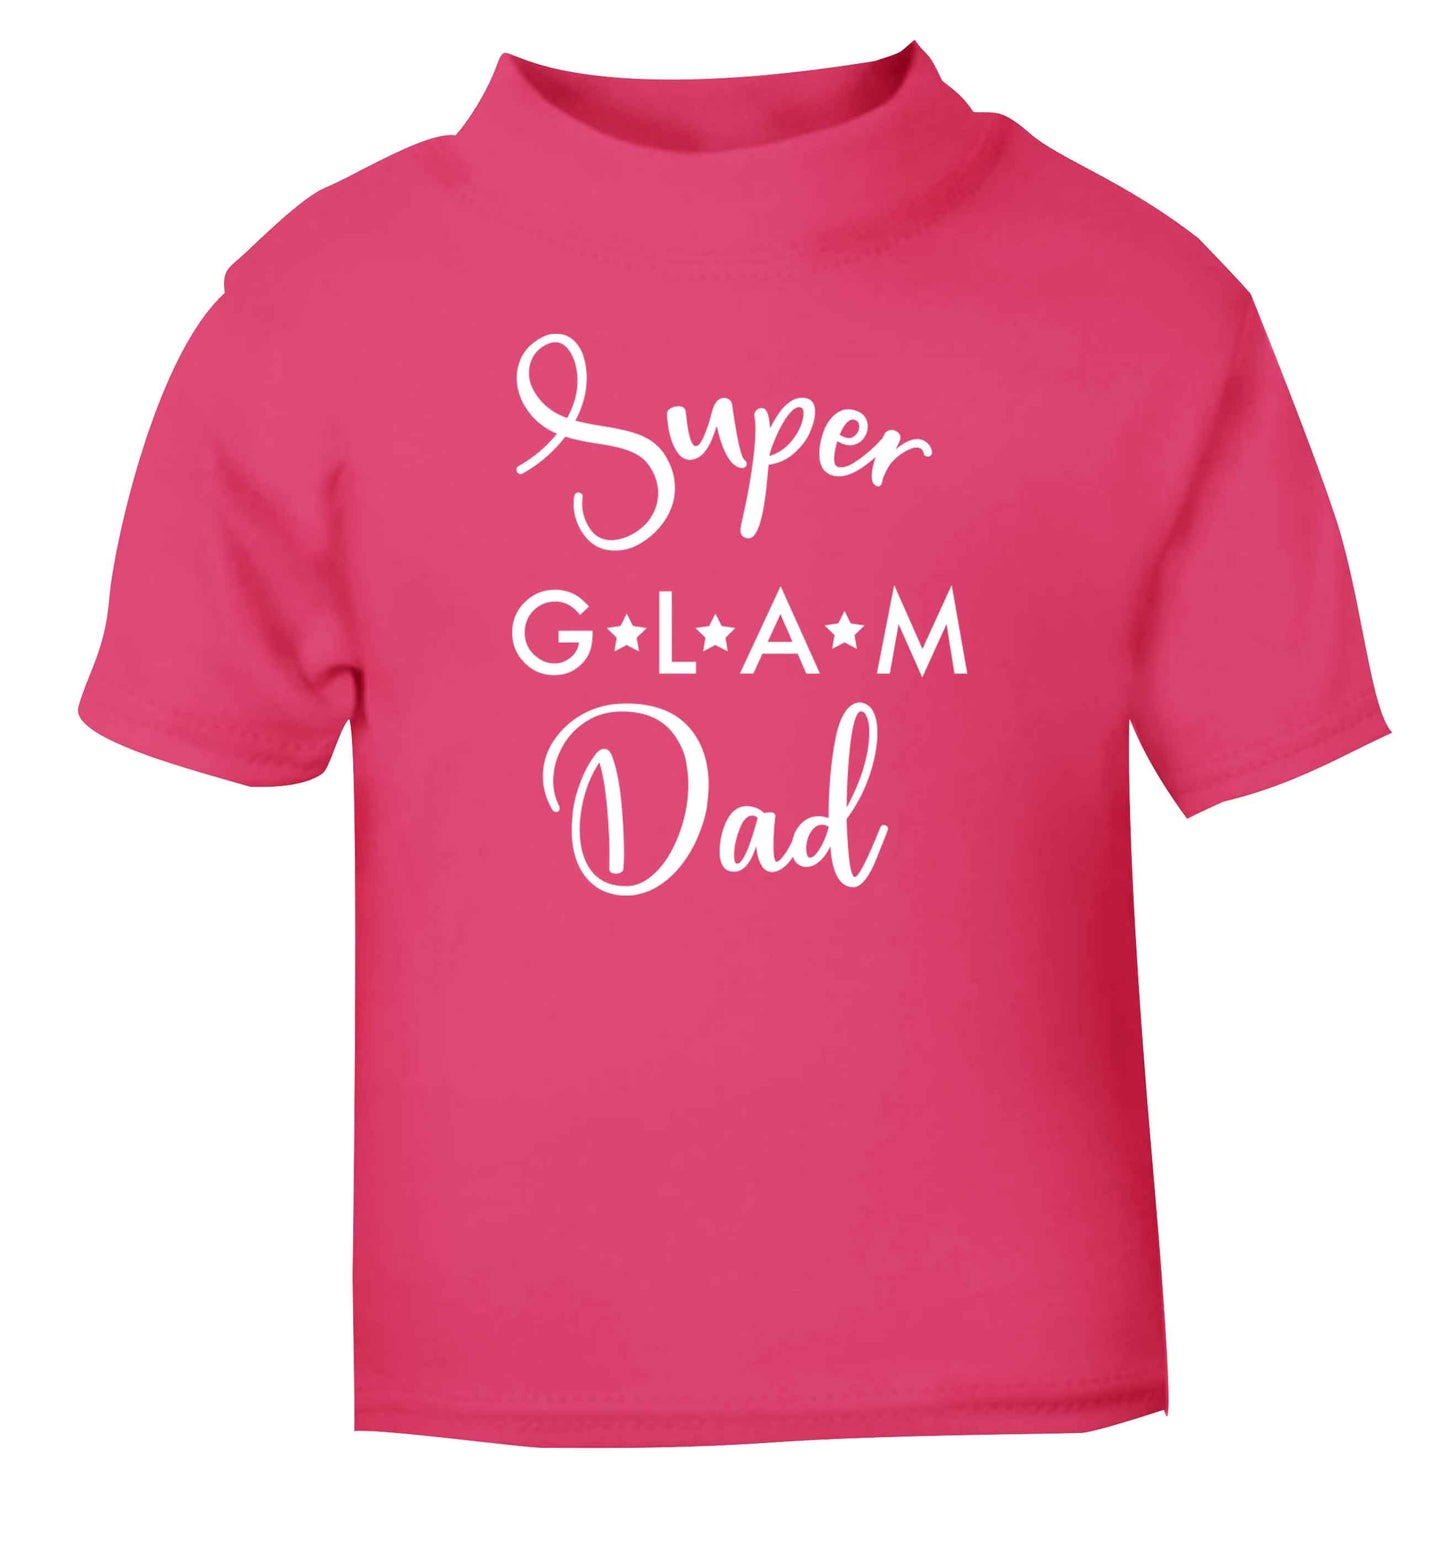 Super glam Dad pink Baby Toddler Tshirt 2 Years